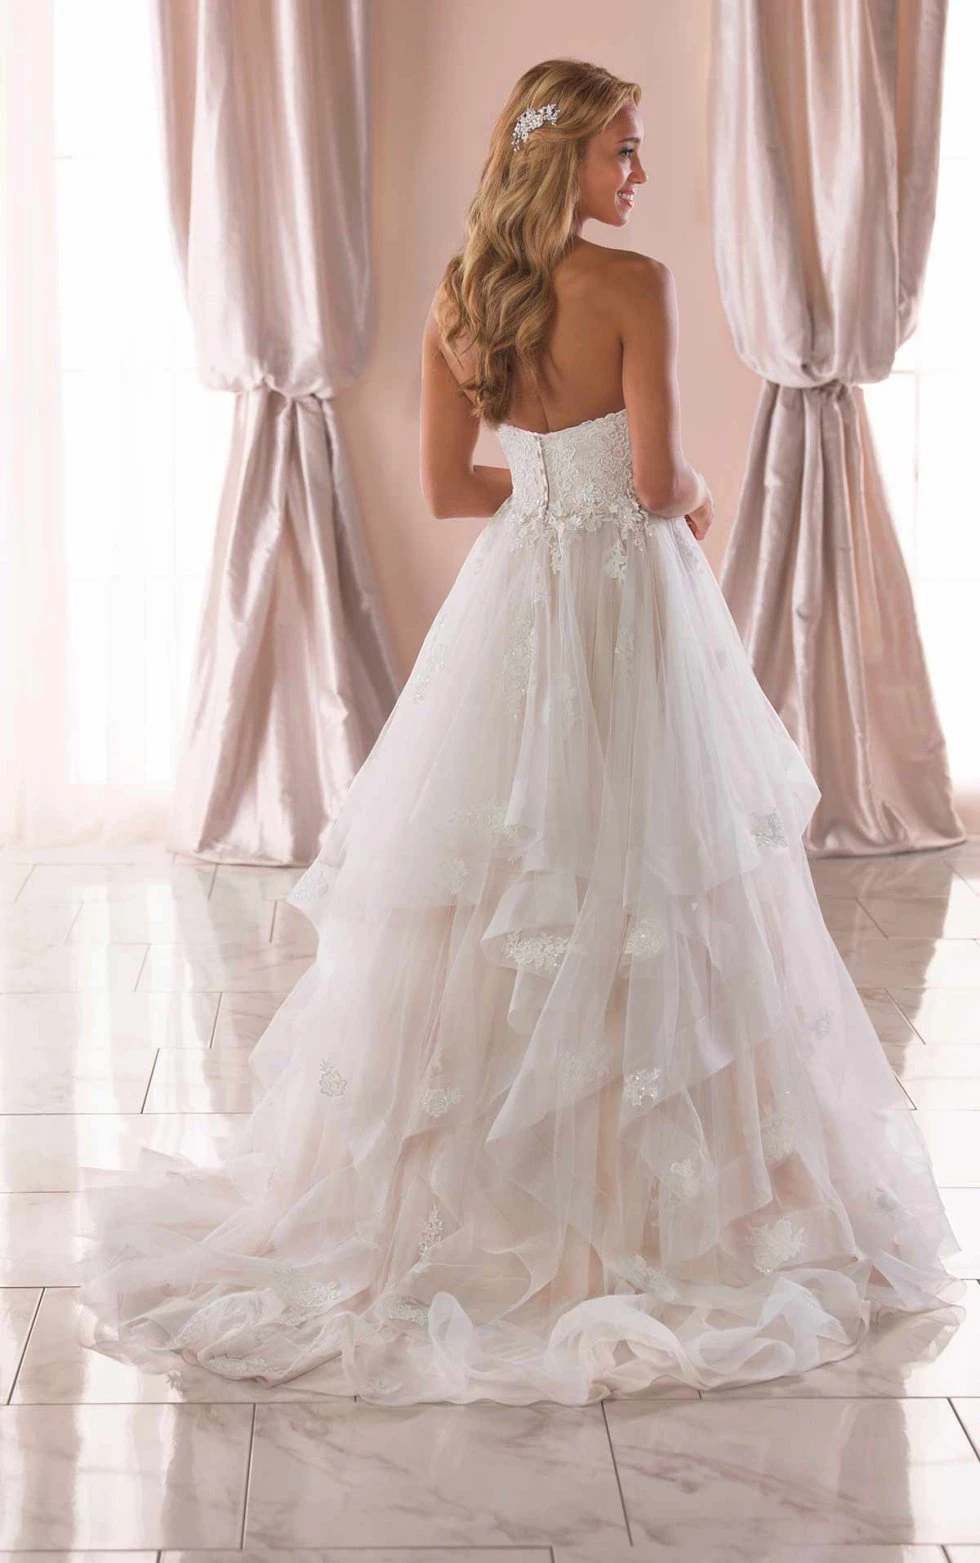 Whimsical Ballgown Wedding Dress with Horsehair Trim   Stella York ...